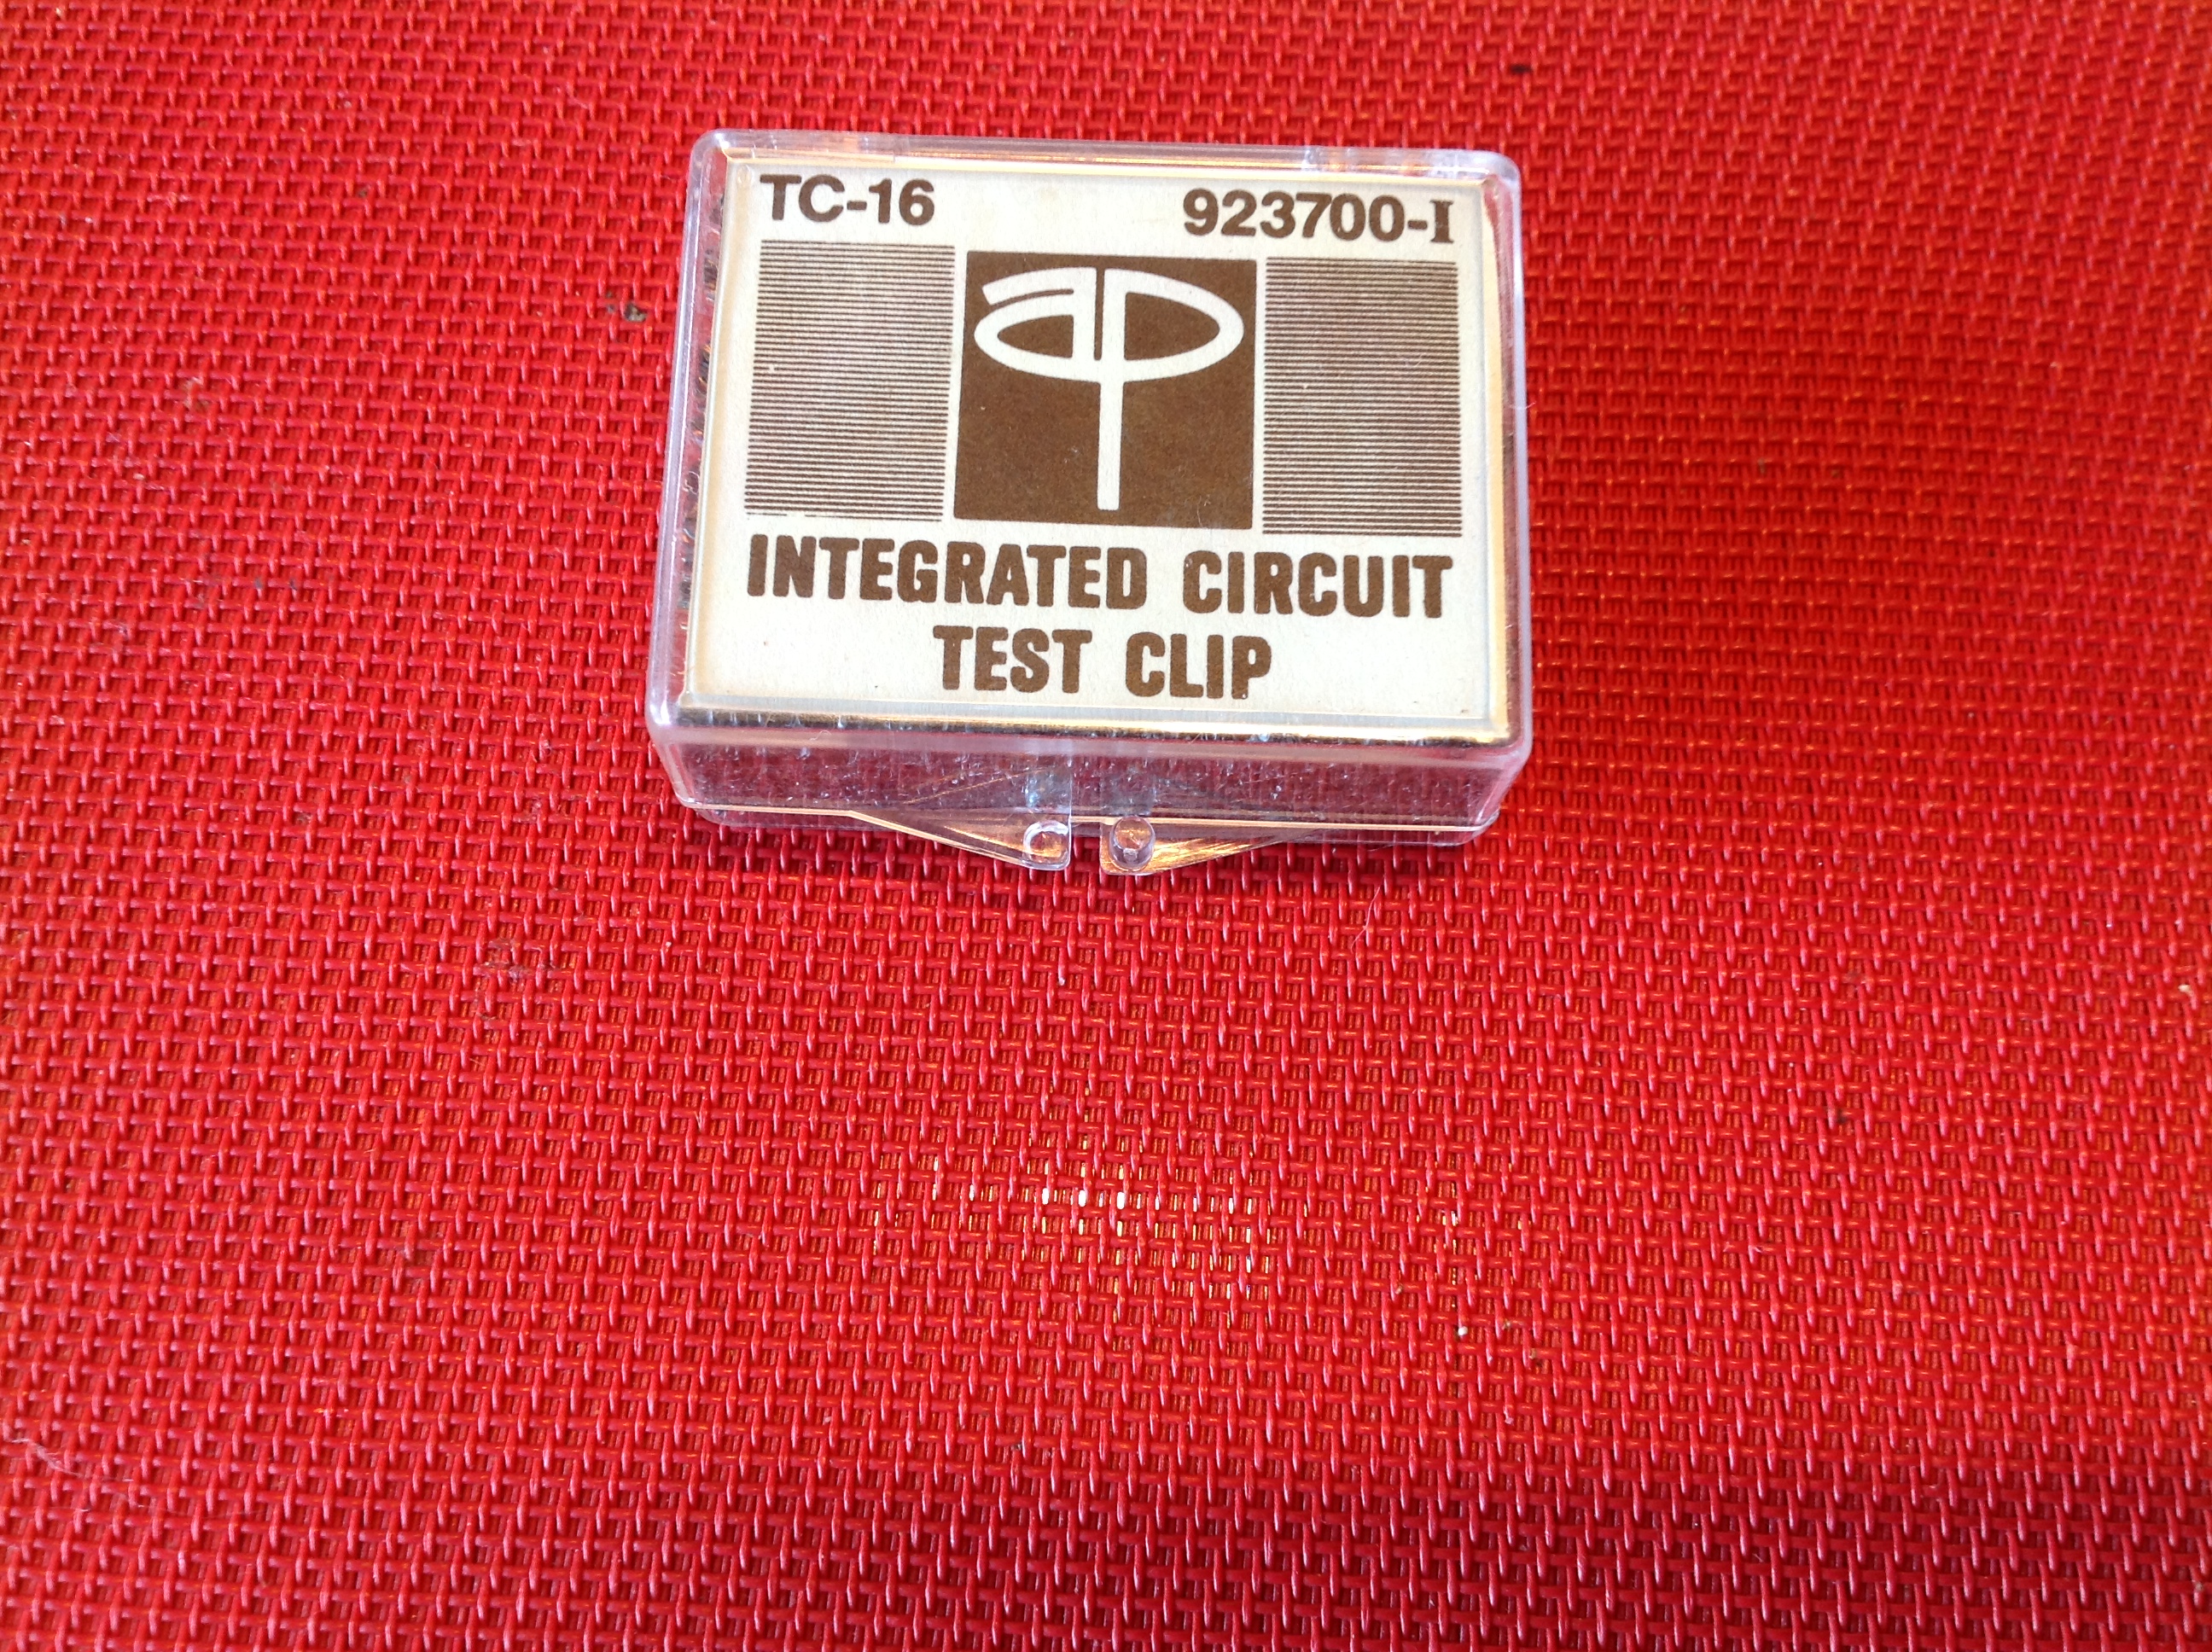 Integrated Circuit Test Clip, TC-16, 923700-I